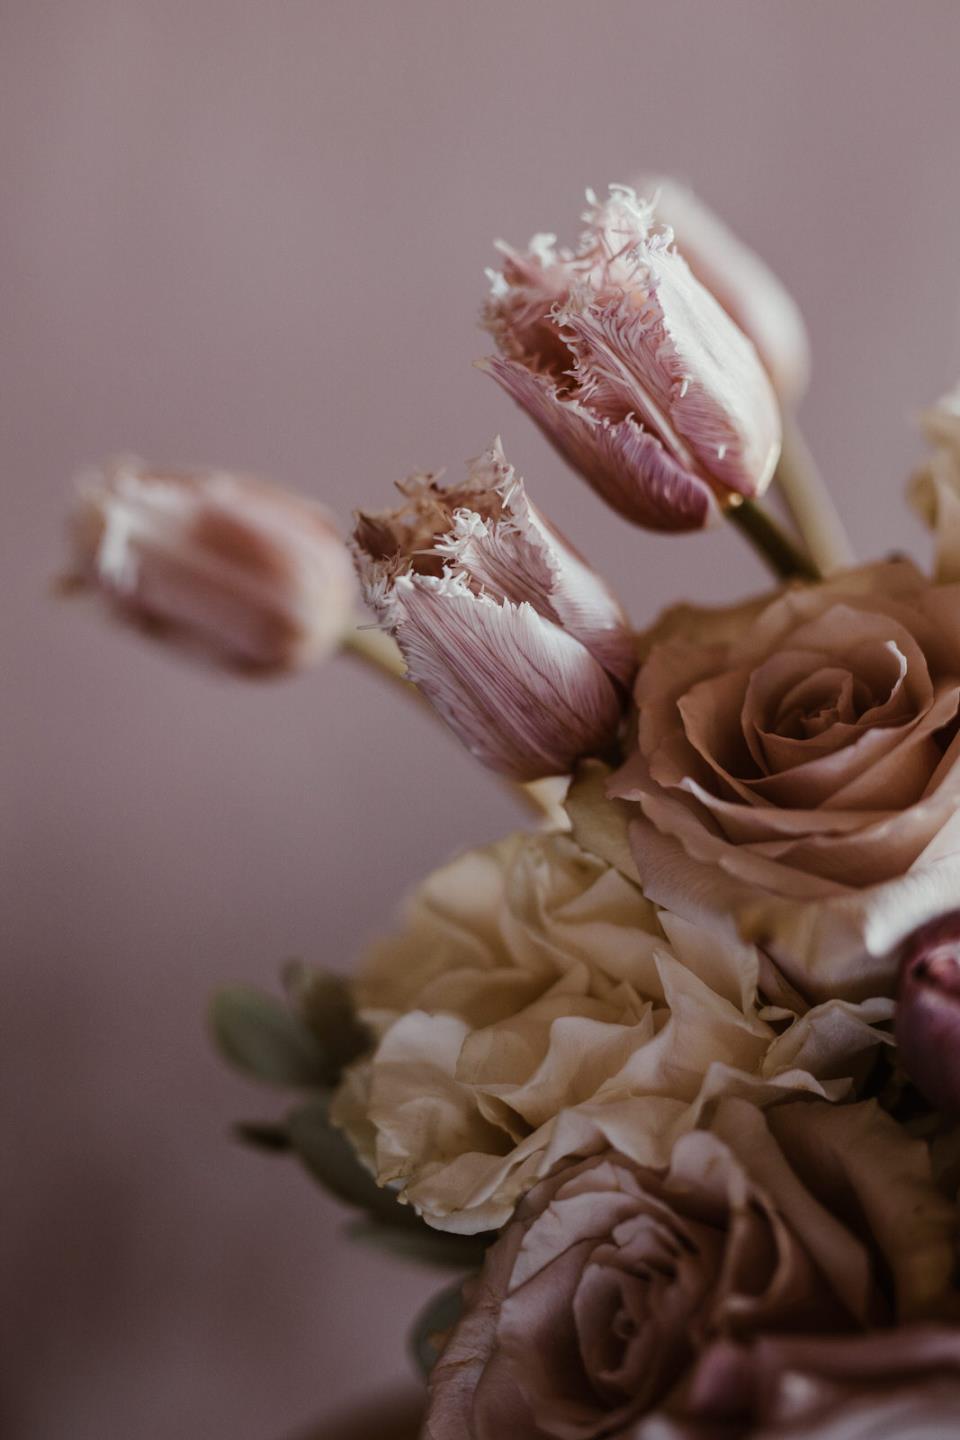 bouquet details | Laura Stramacchia | Wedding Photography